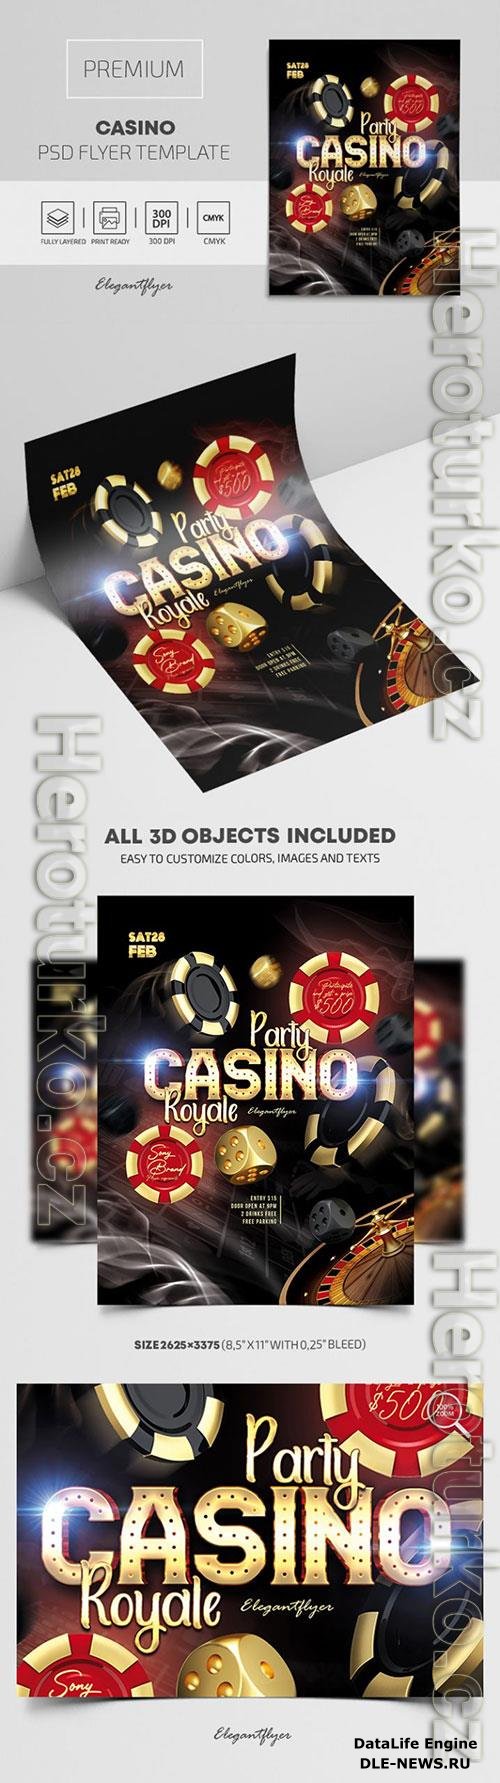 Casino Premium PSD Flyer Template